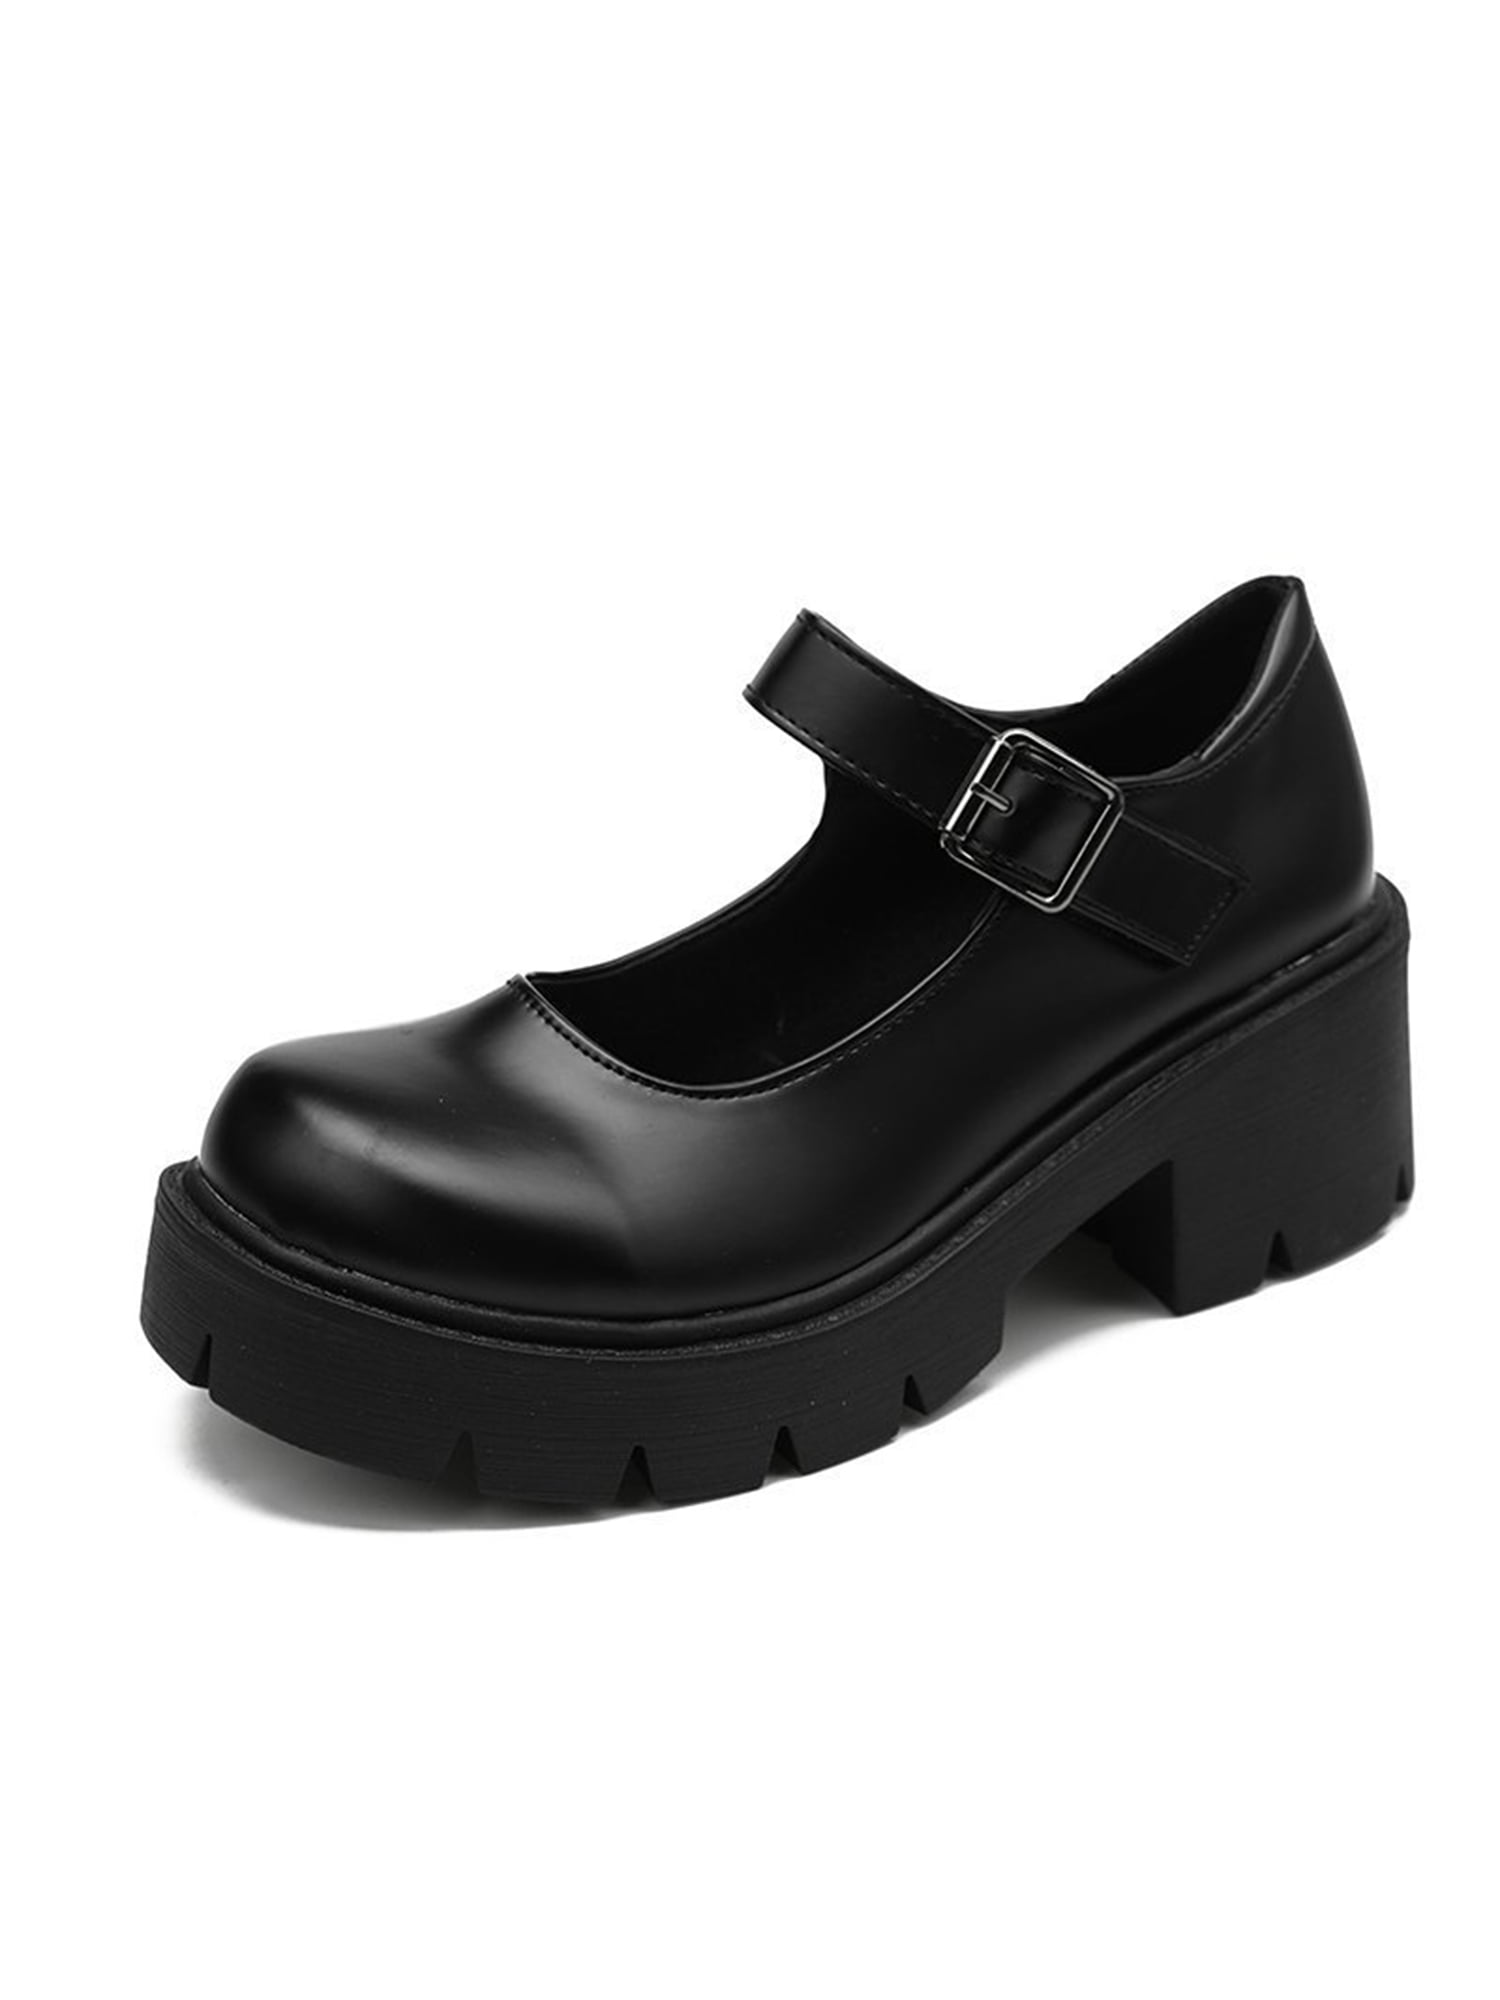 Casadei black suede platform heels size US 8,5 | My good closet